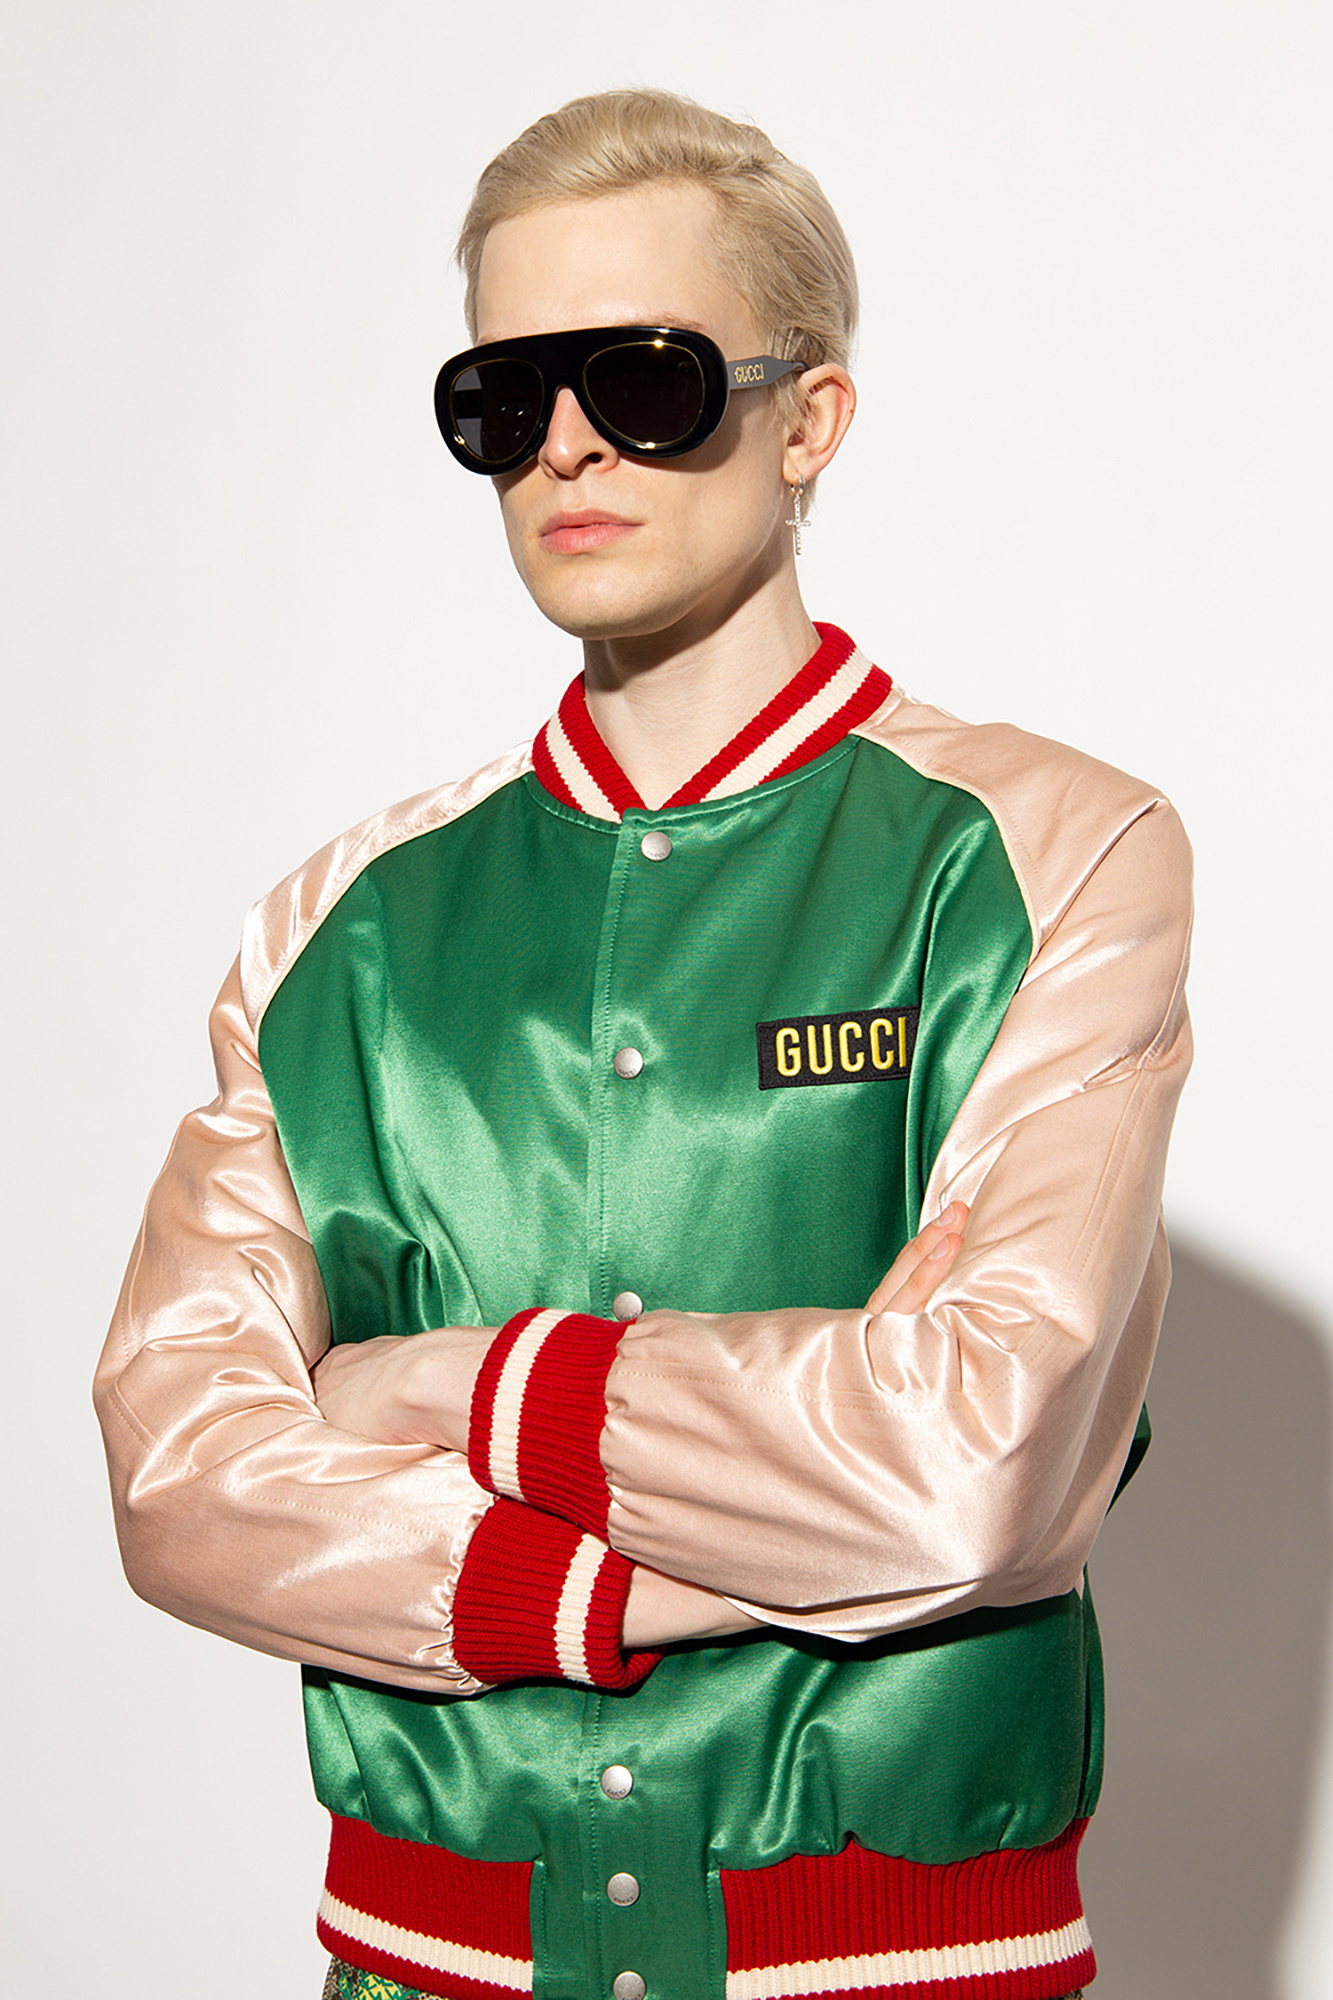 Gucci uglyworldwide jazzelle zanaughtti chrishabana glvss sunglasses collection collaboration release